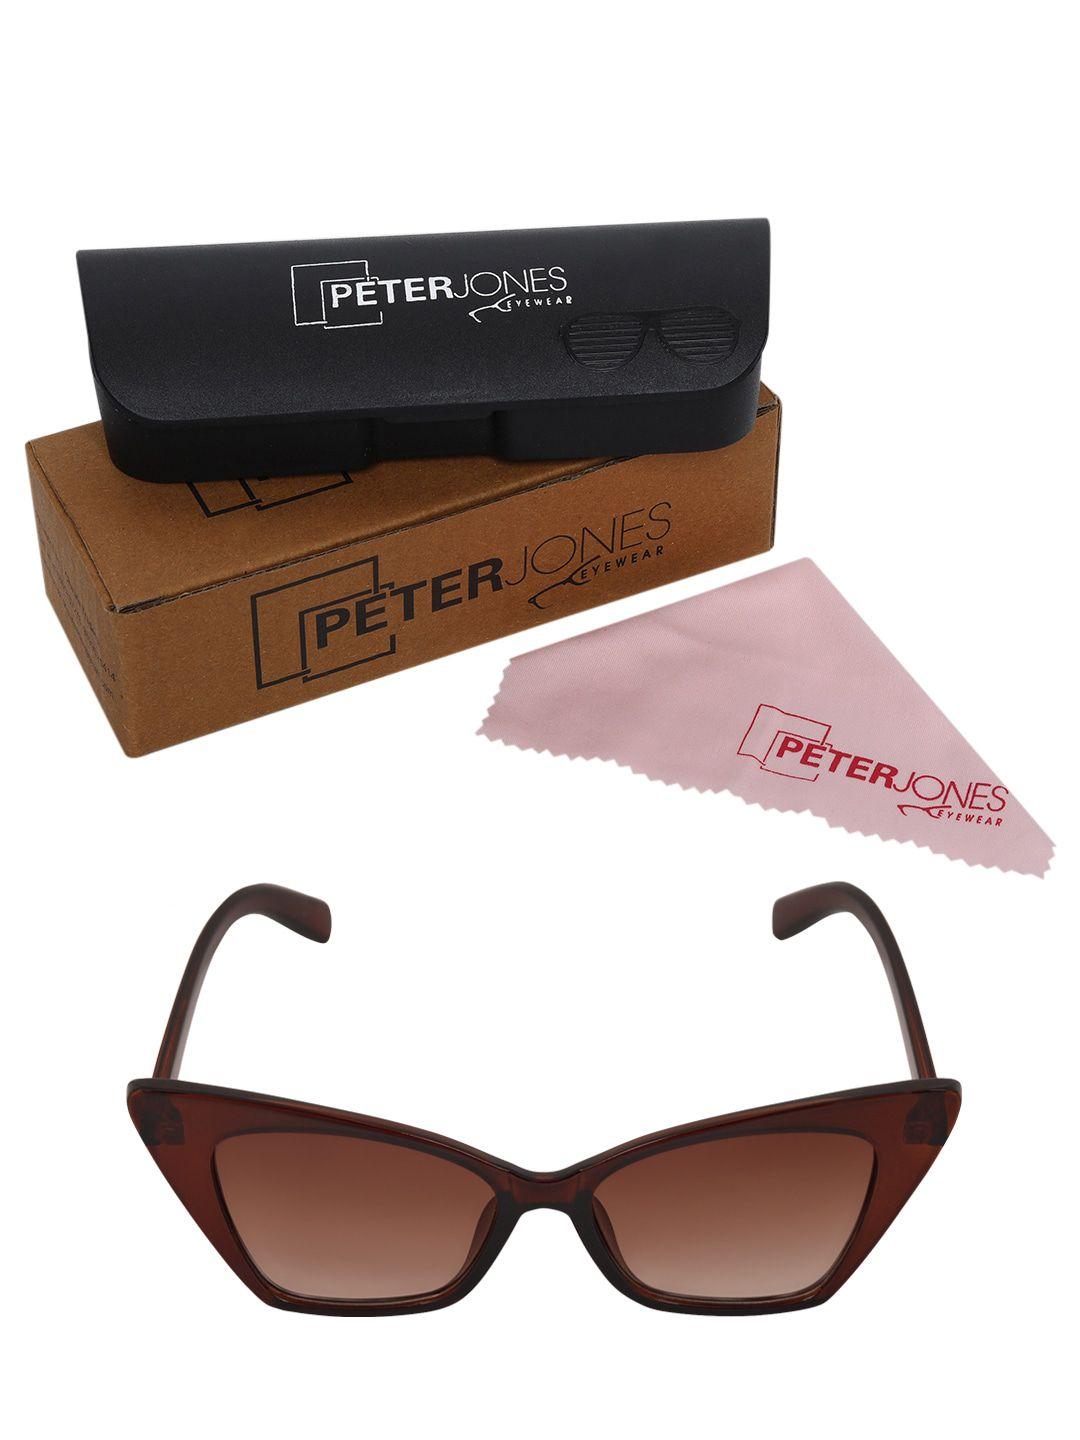 peter jones eyewear unisex cateye sunglasses with uv protected lens 13024bw_s